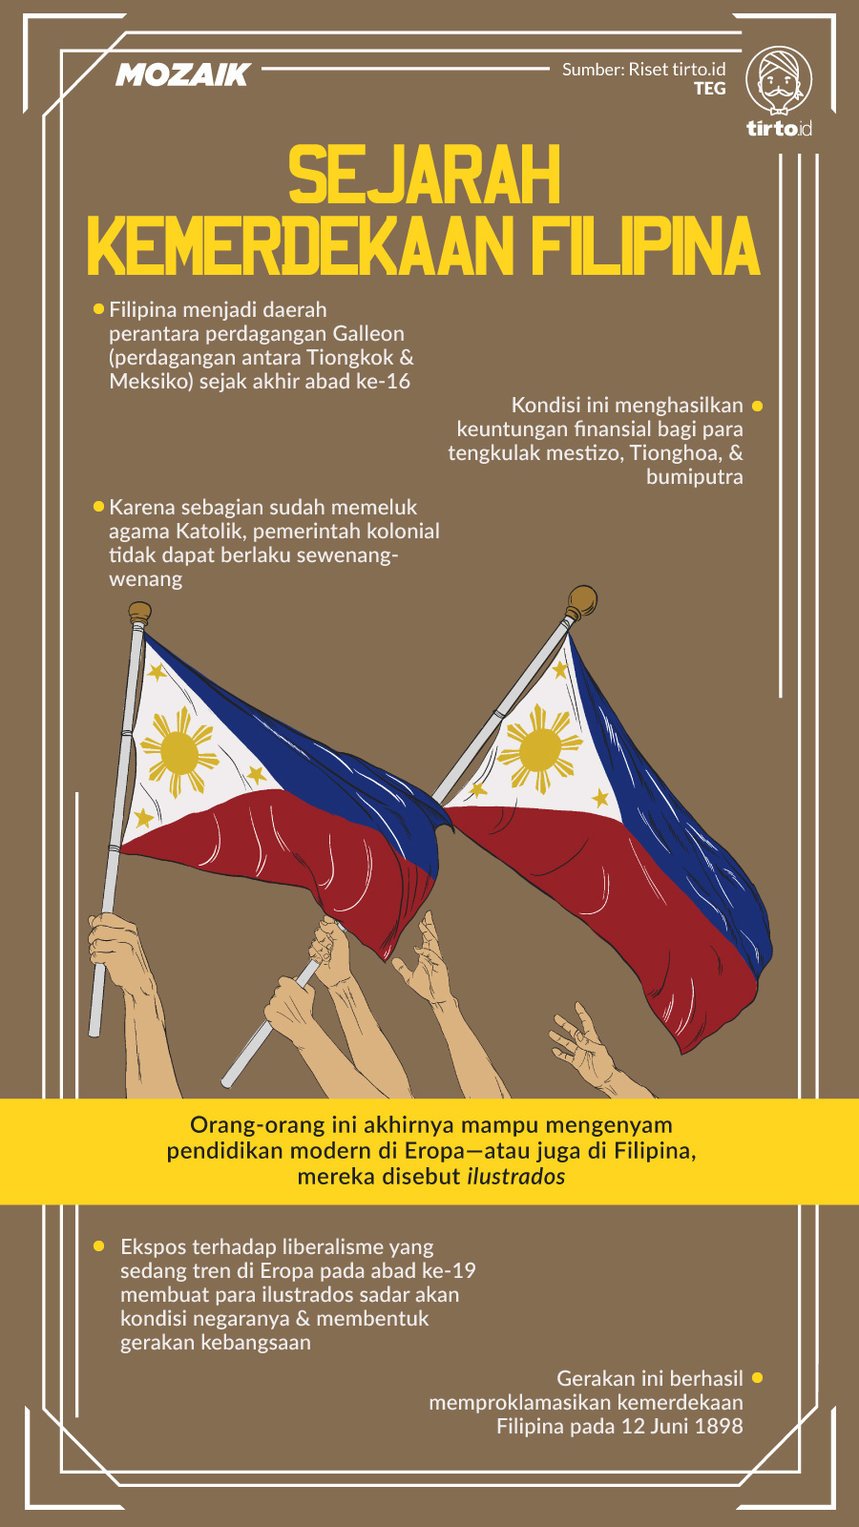 Infografik Mozaik Deklarasi kemerdekaan Filipina